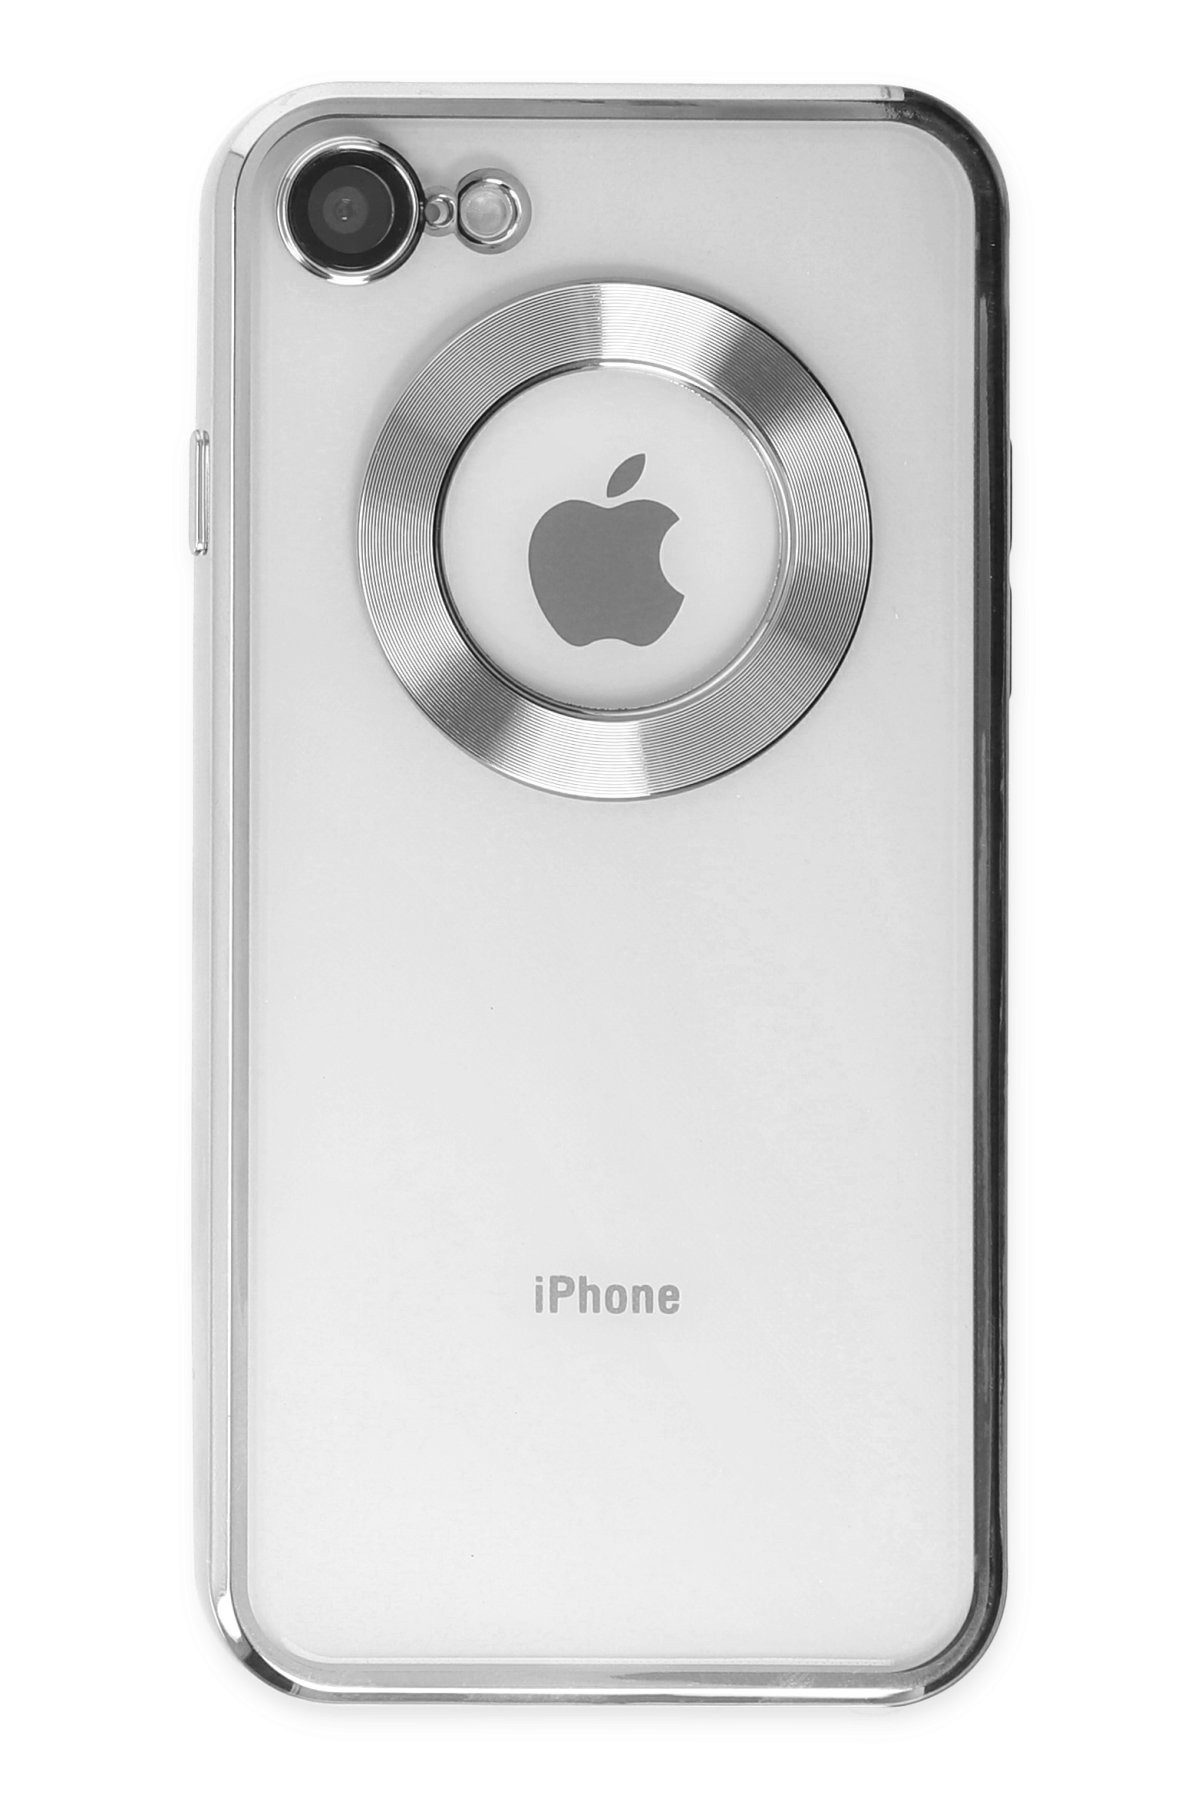 Newface iPhone 7 Kılıf Coco Karbon Silikon - Siyah